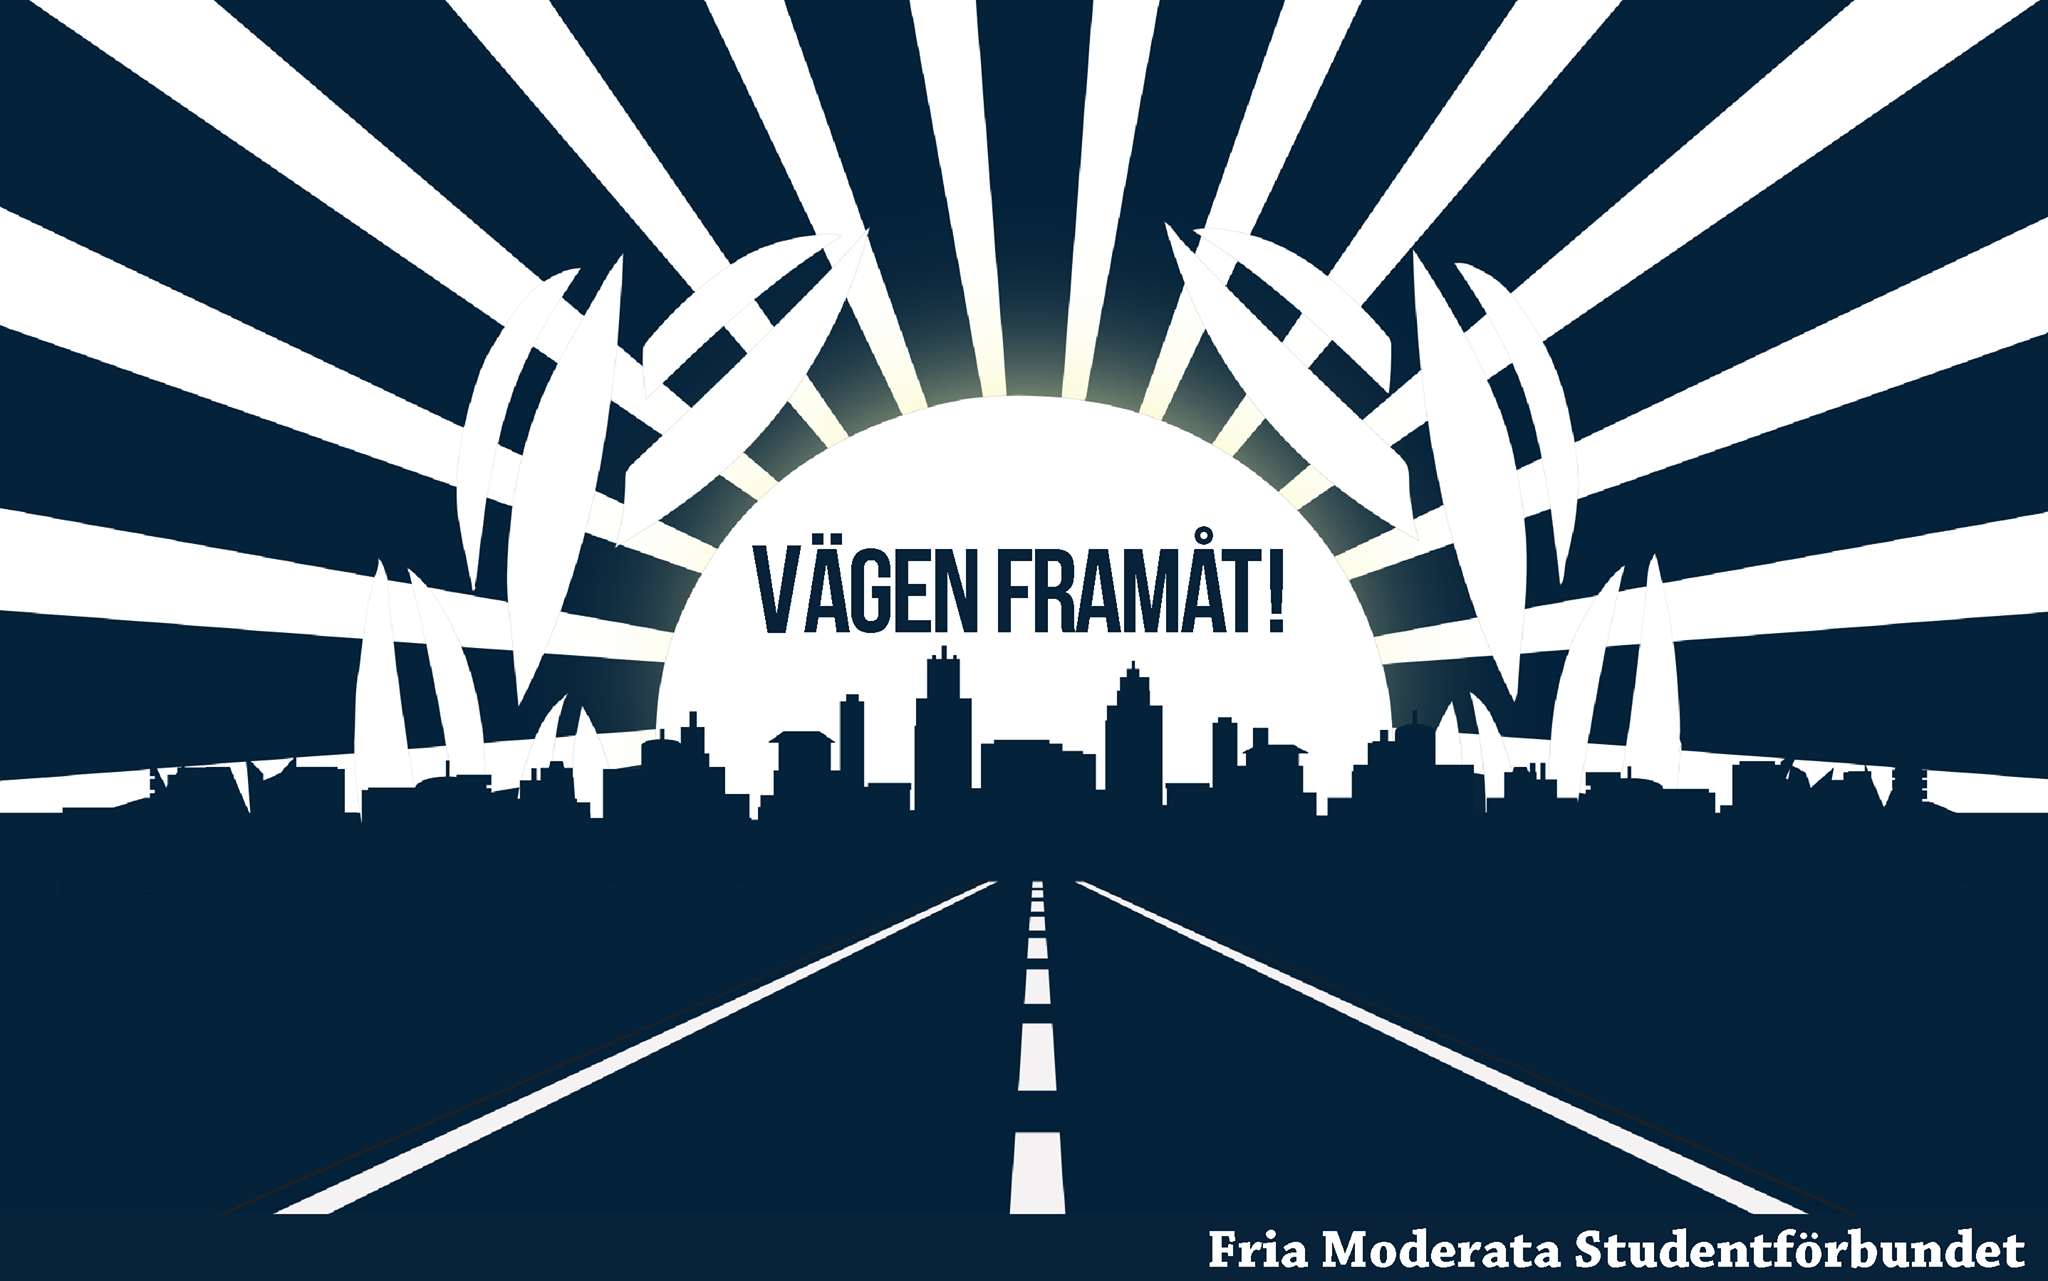 You are currently viewing Seminarium 21/3: Vägen framåt!